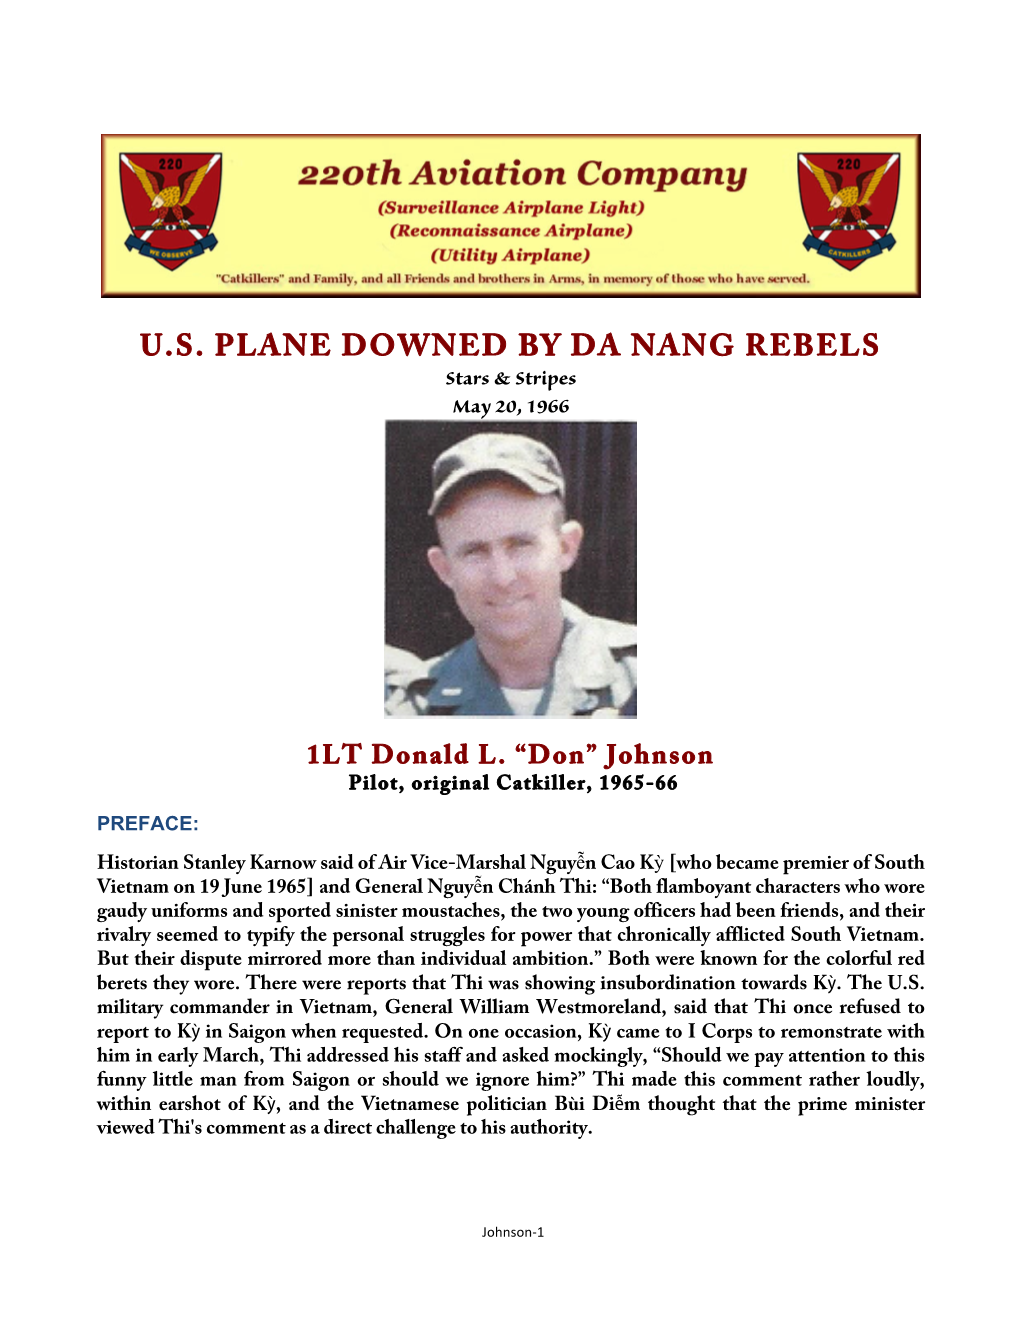 US Plane Downed by Da Nang Rebels, the Don